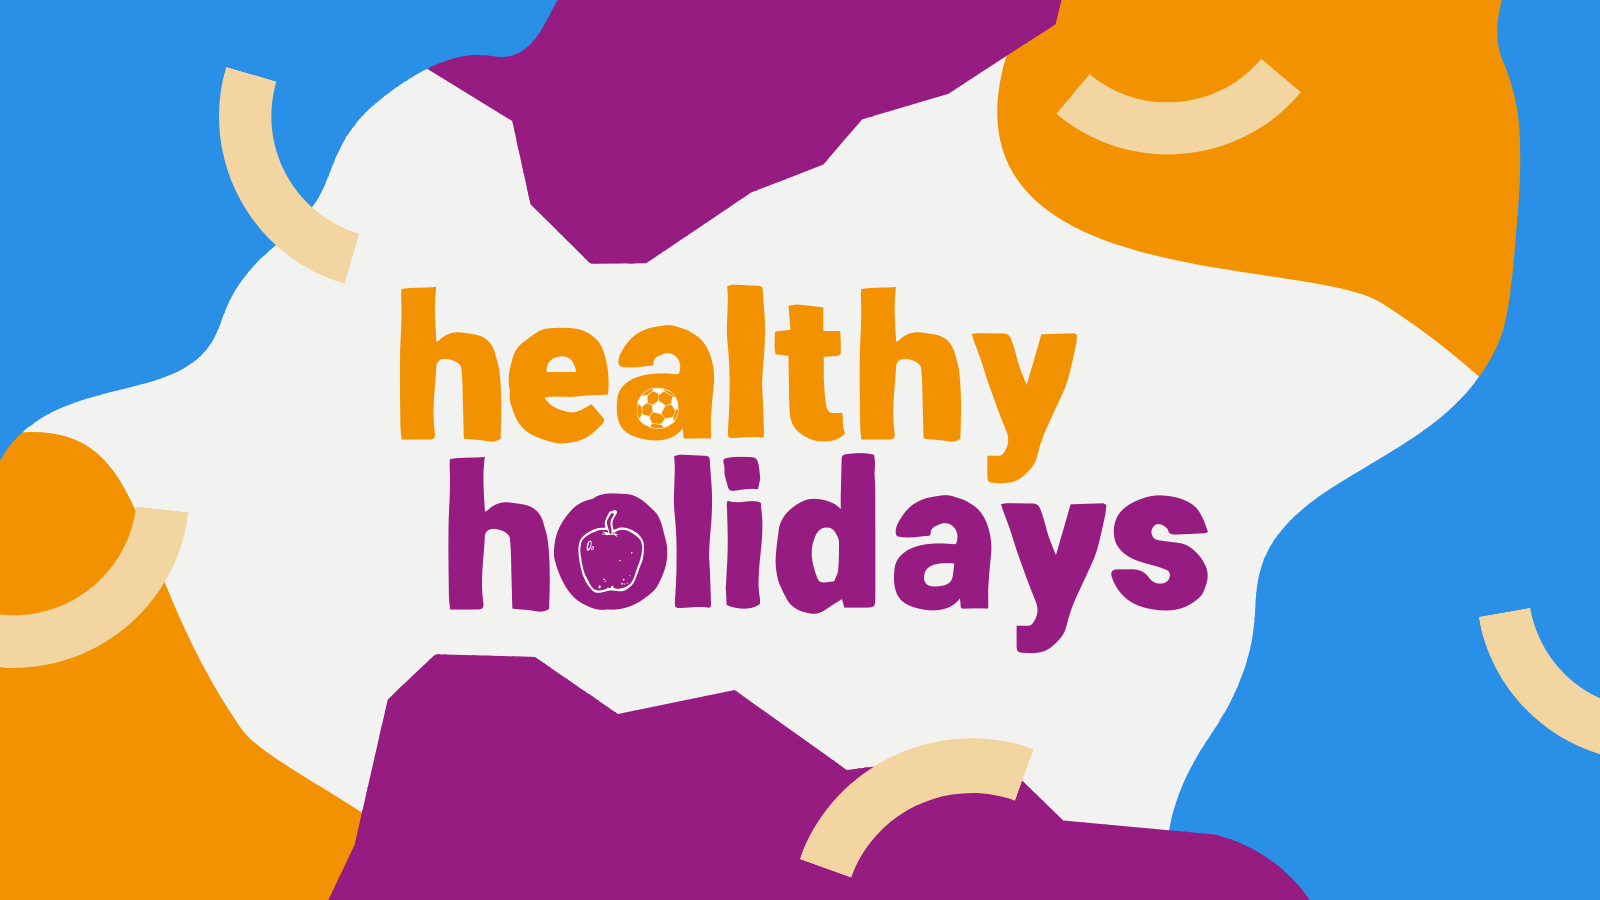 Healthy holidays logo